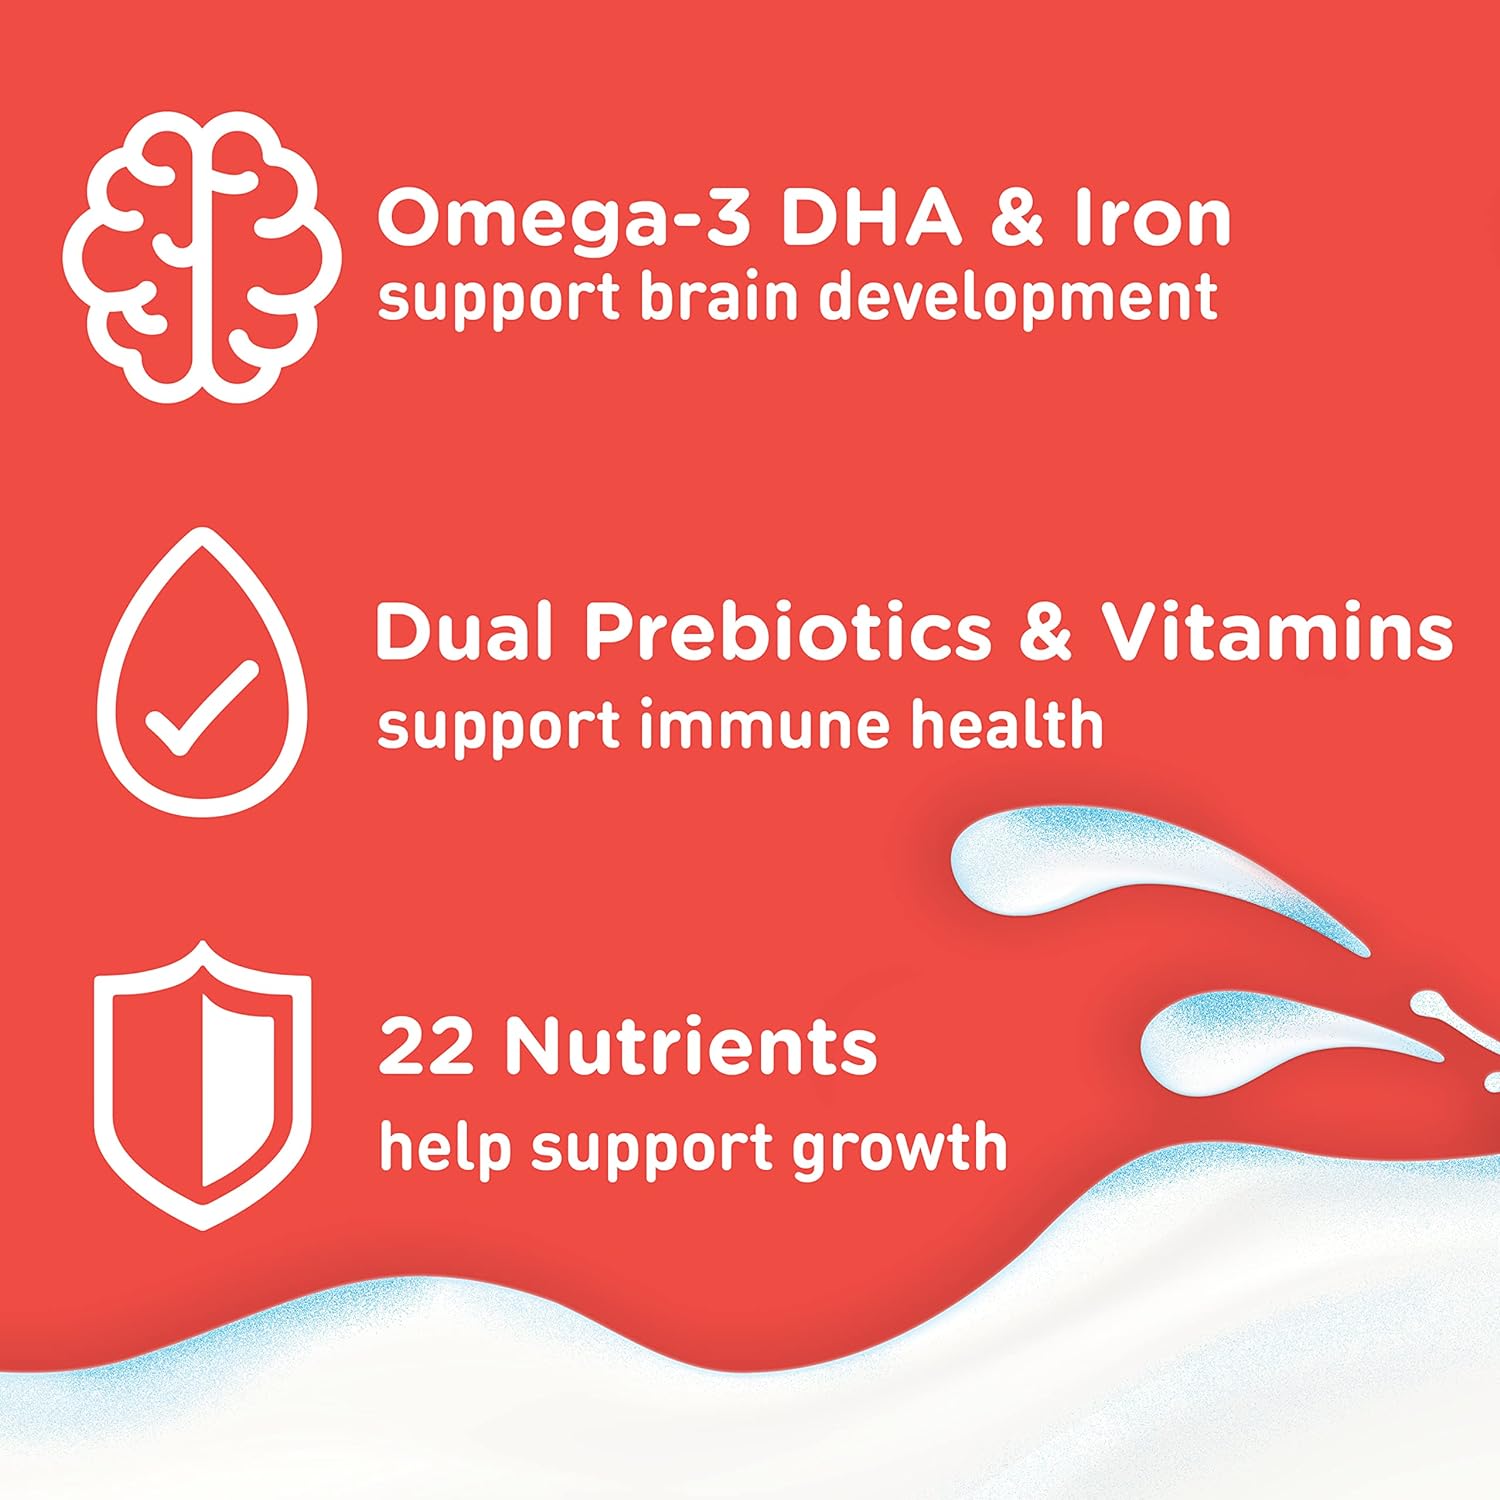 Enfagrow NeuroPro Toddler Nutritional Drink, Natural Milk Flavor, Omega-3 DHA & MGFM for Brain Support, Prebiotics & Vitamins for Immune Health, Non-GMO, Ready to Feed Bottle, 8 Fl Oz (24 Bottles)